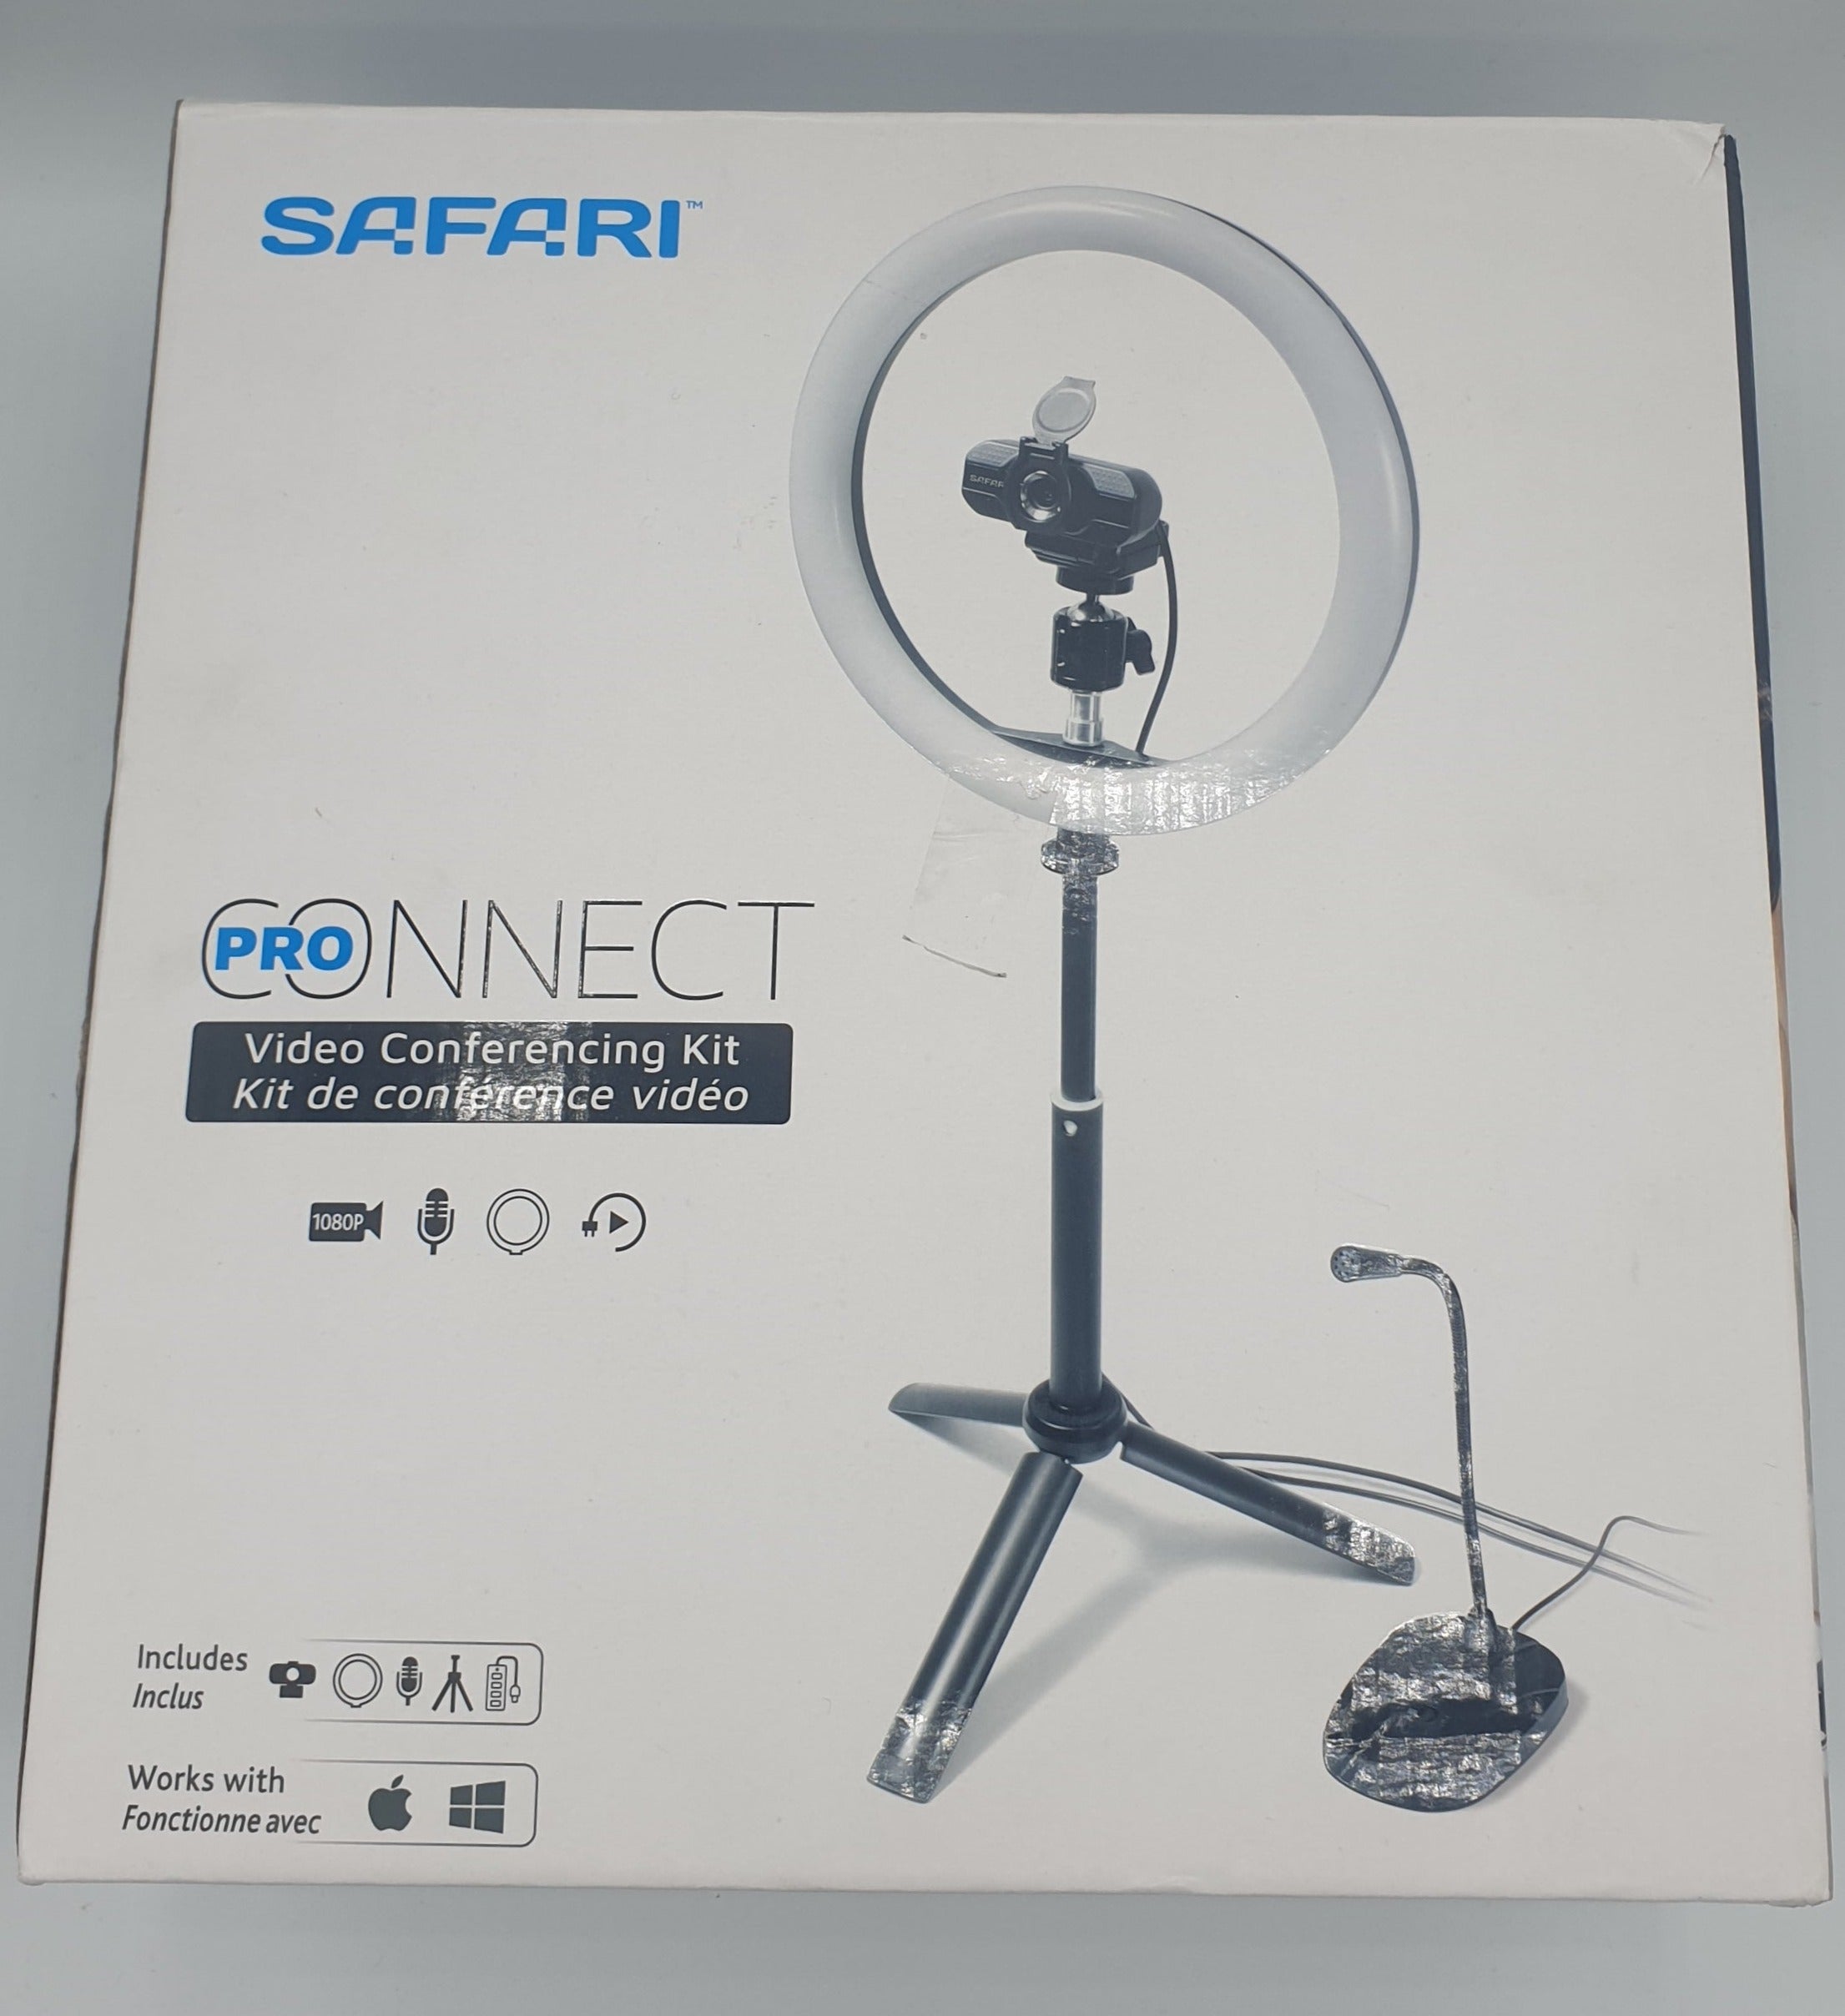 Safari Pro Connect Video Conferencing Kit